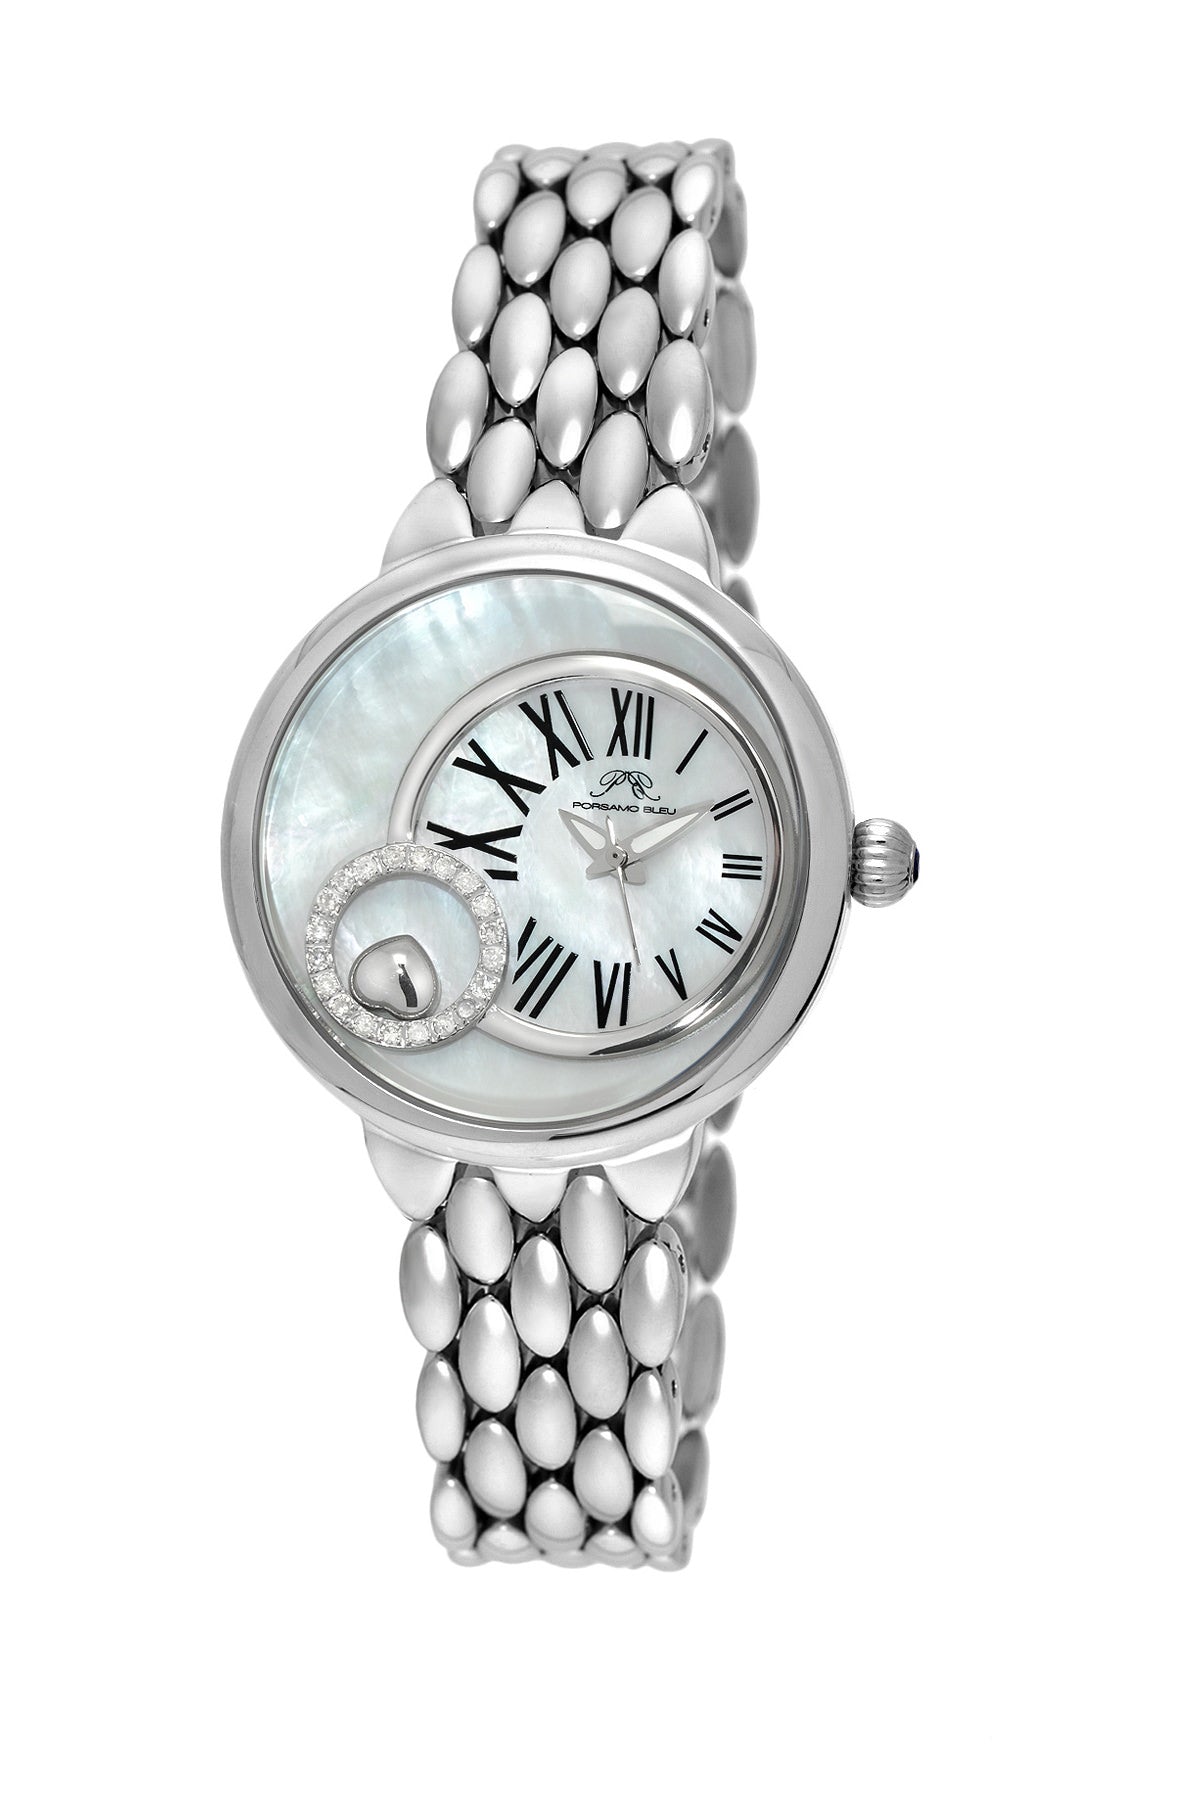 Porsamo Bleu Claire luxury diamond women's stainless steel watch, silver, white 721ACLS